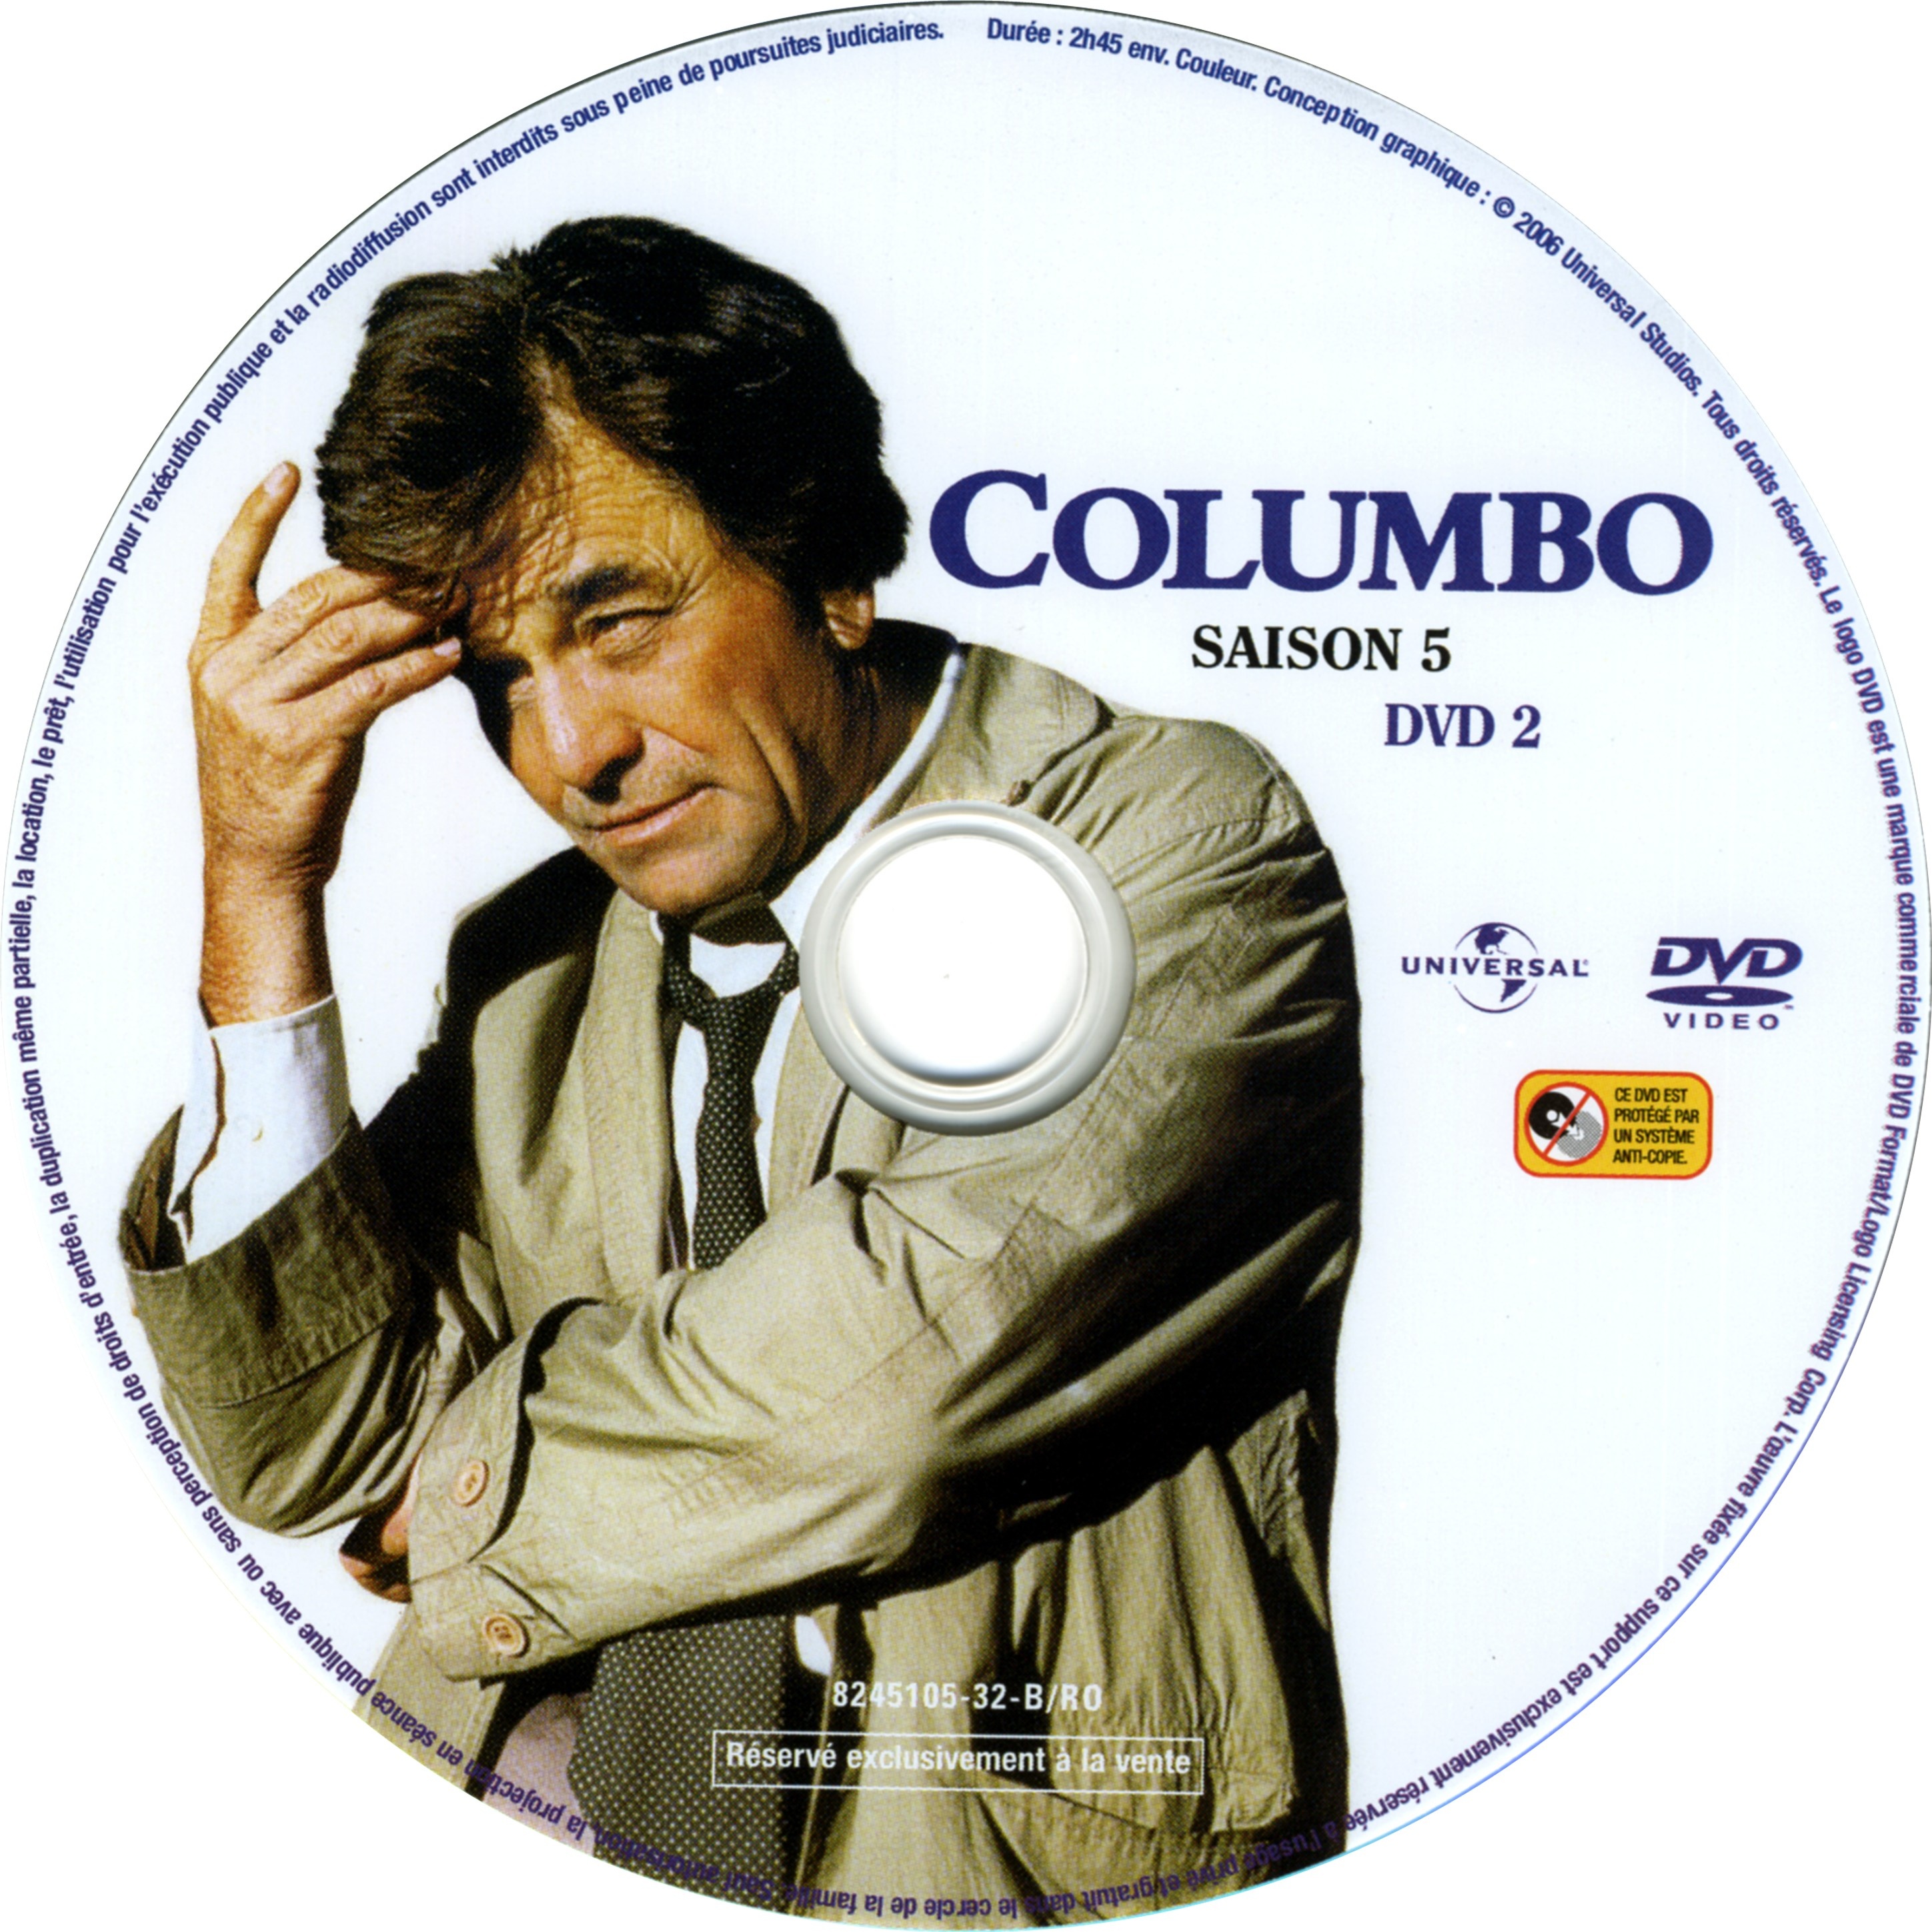 Columbo saison 5 DISC 2